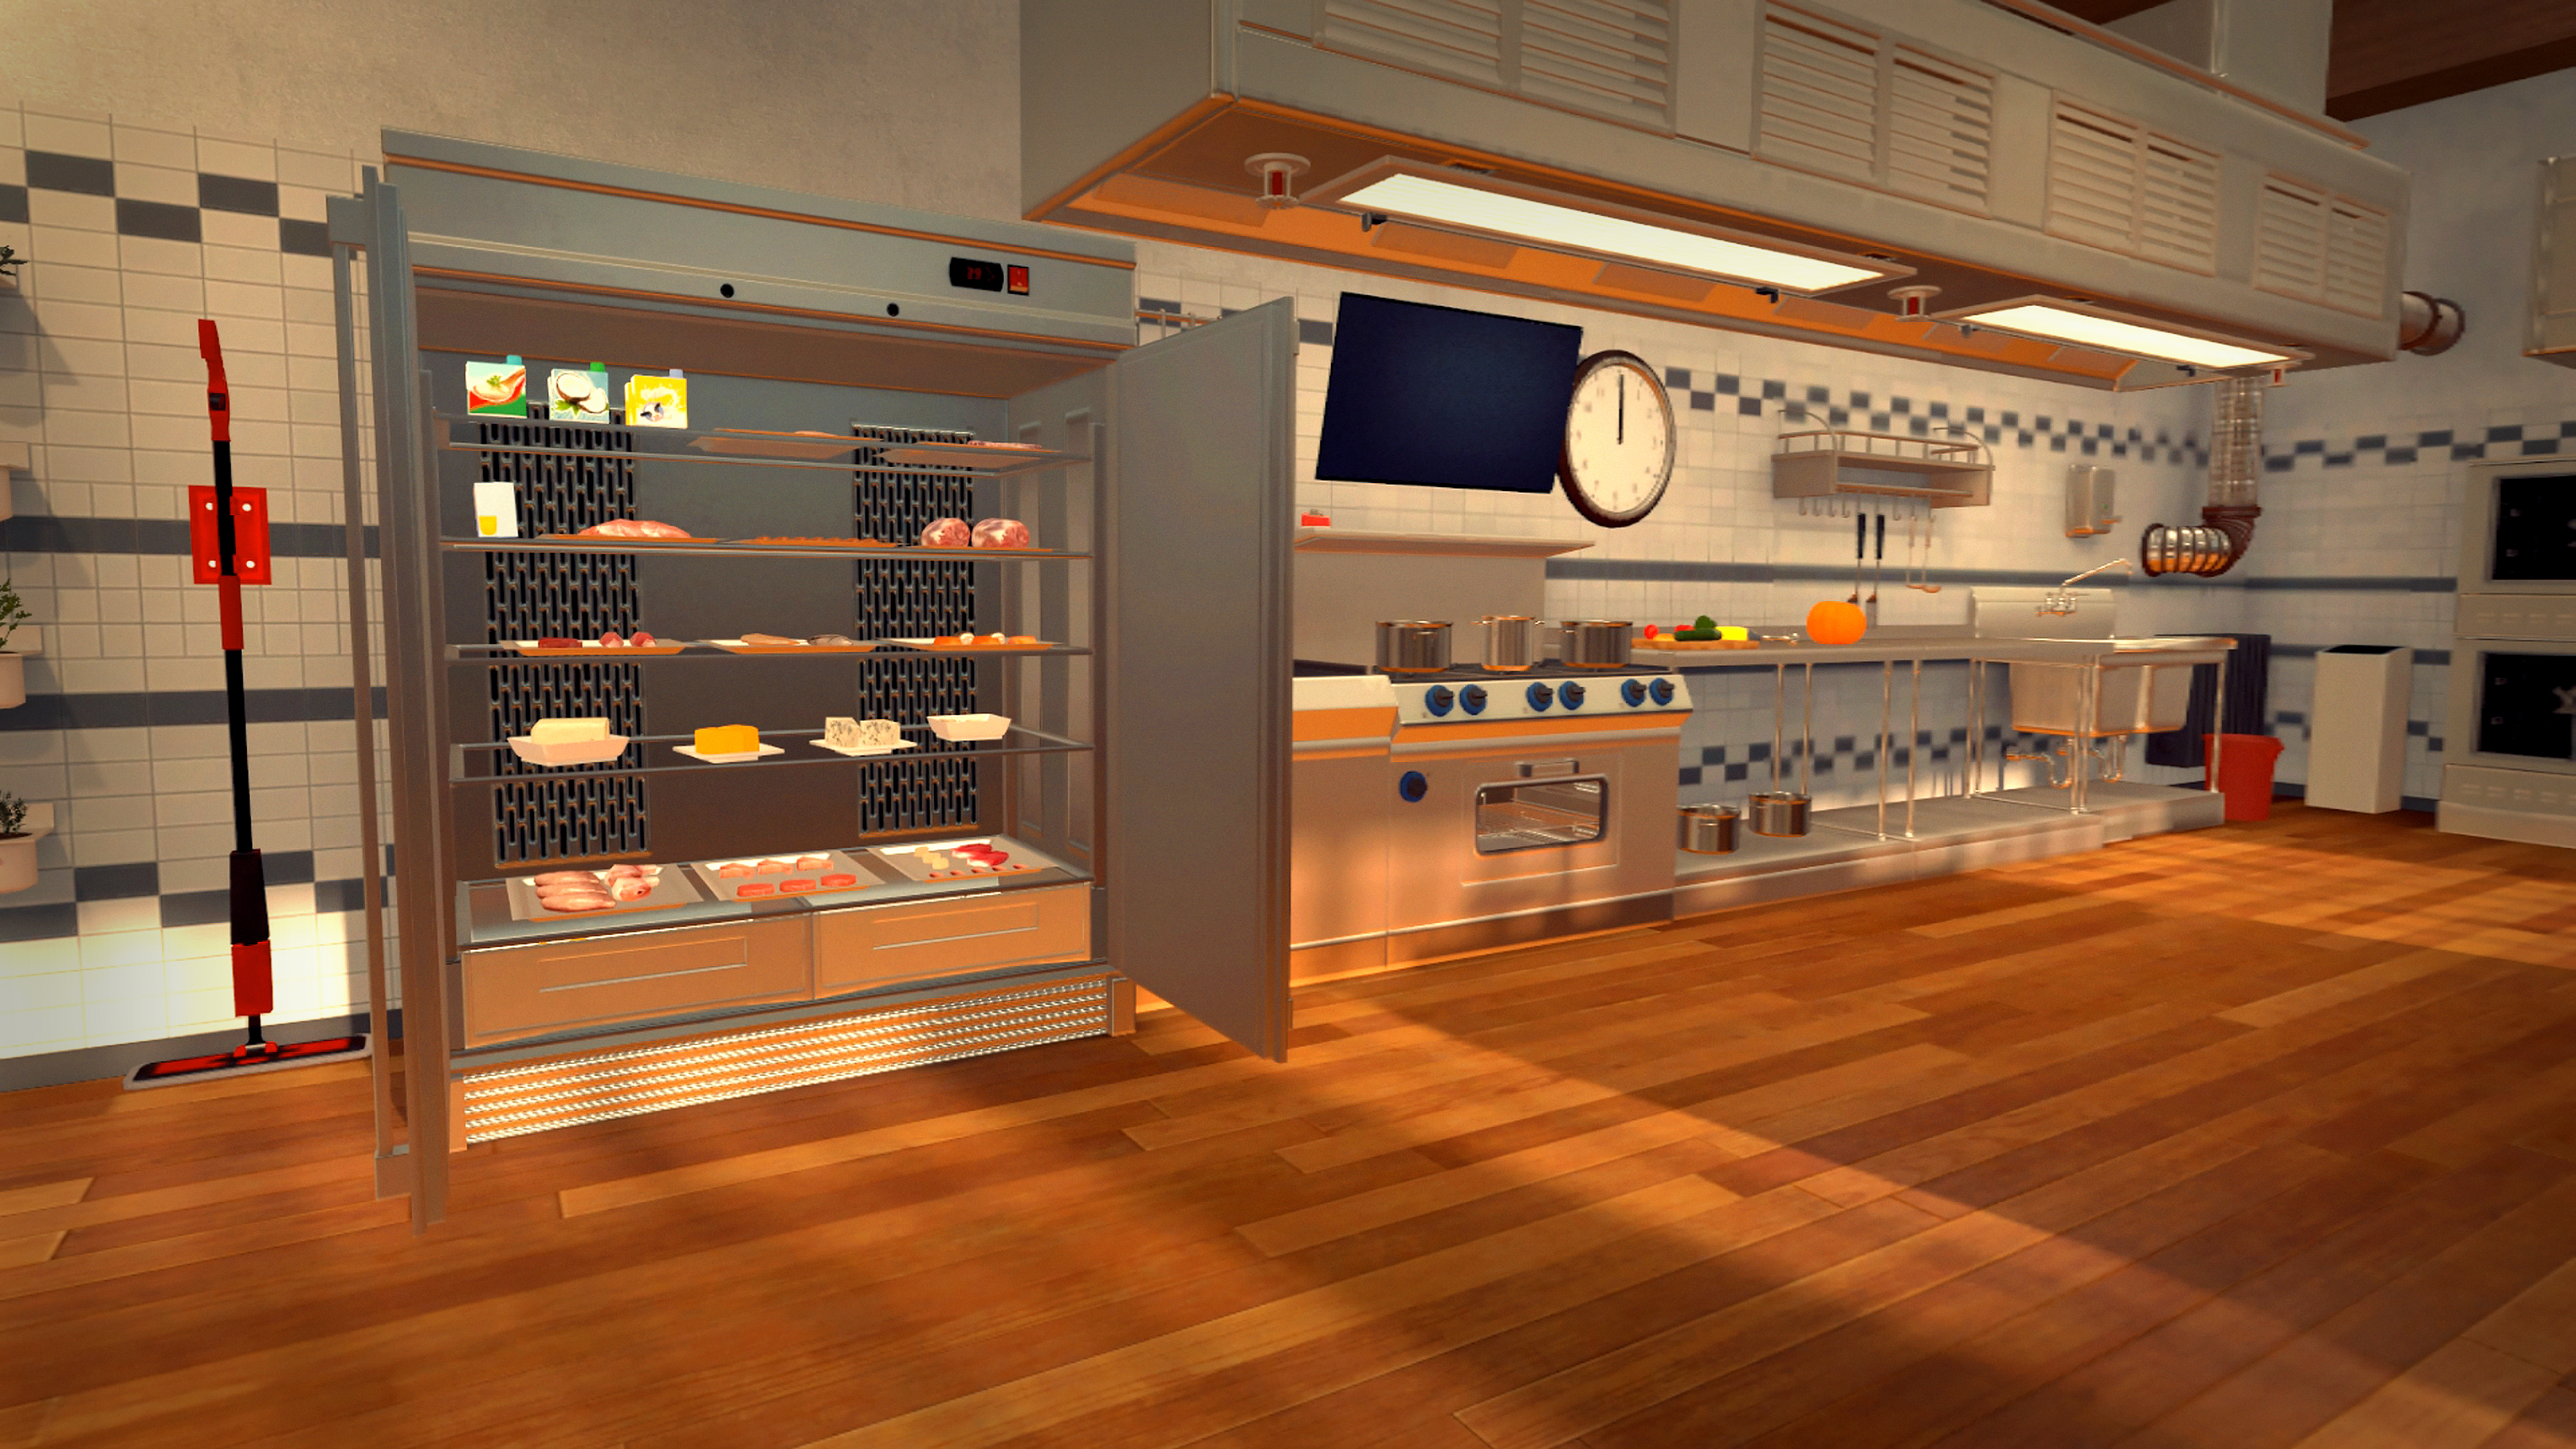 Buy cheap Cooking Simulator + Cooking Simulator VR cd key - lowest